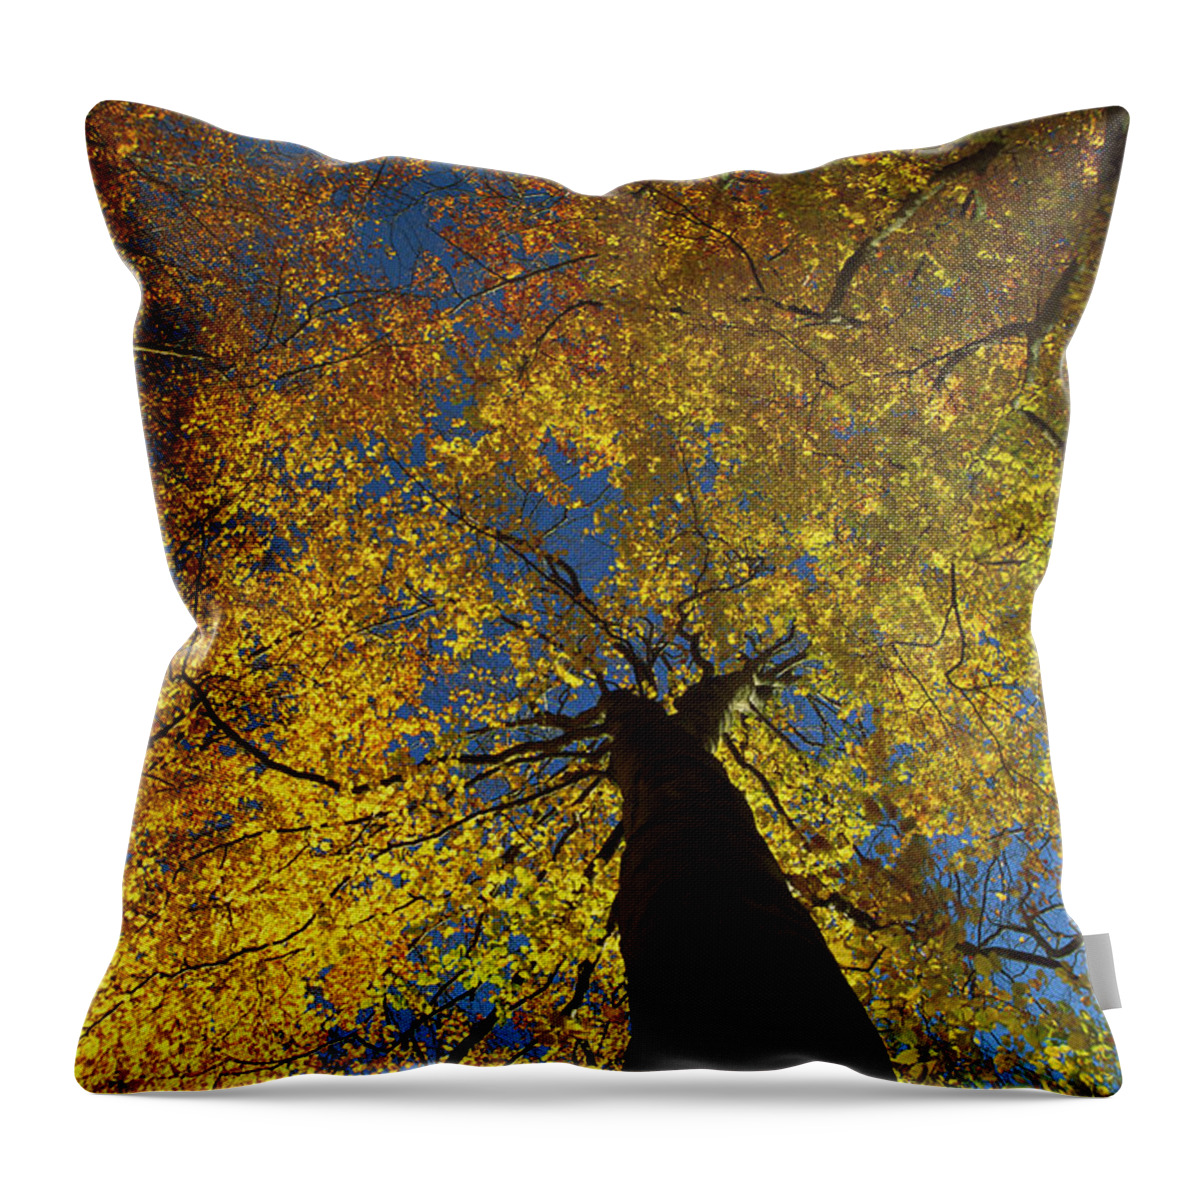 00760115 Throw Pillow featuring the photograph European Beech Fagus Sylvatica Trees by Christian Ziegler